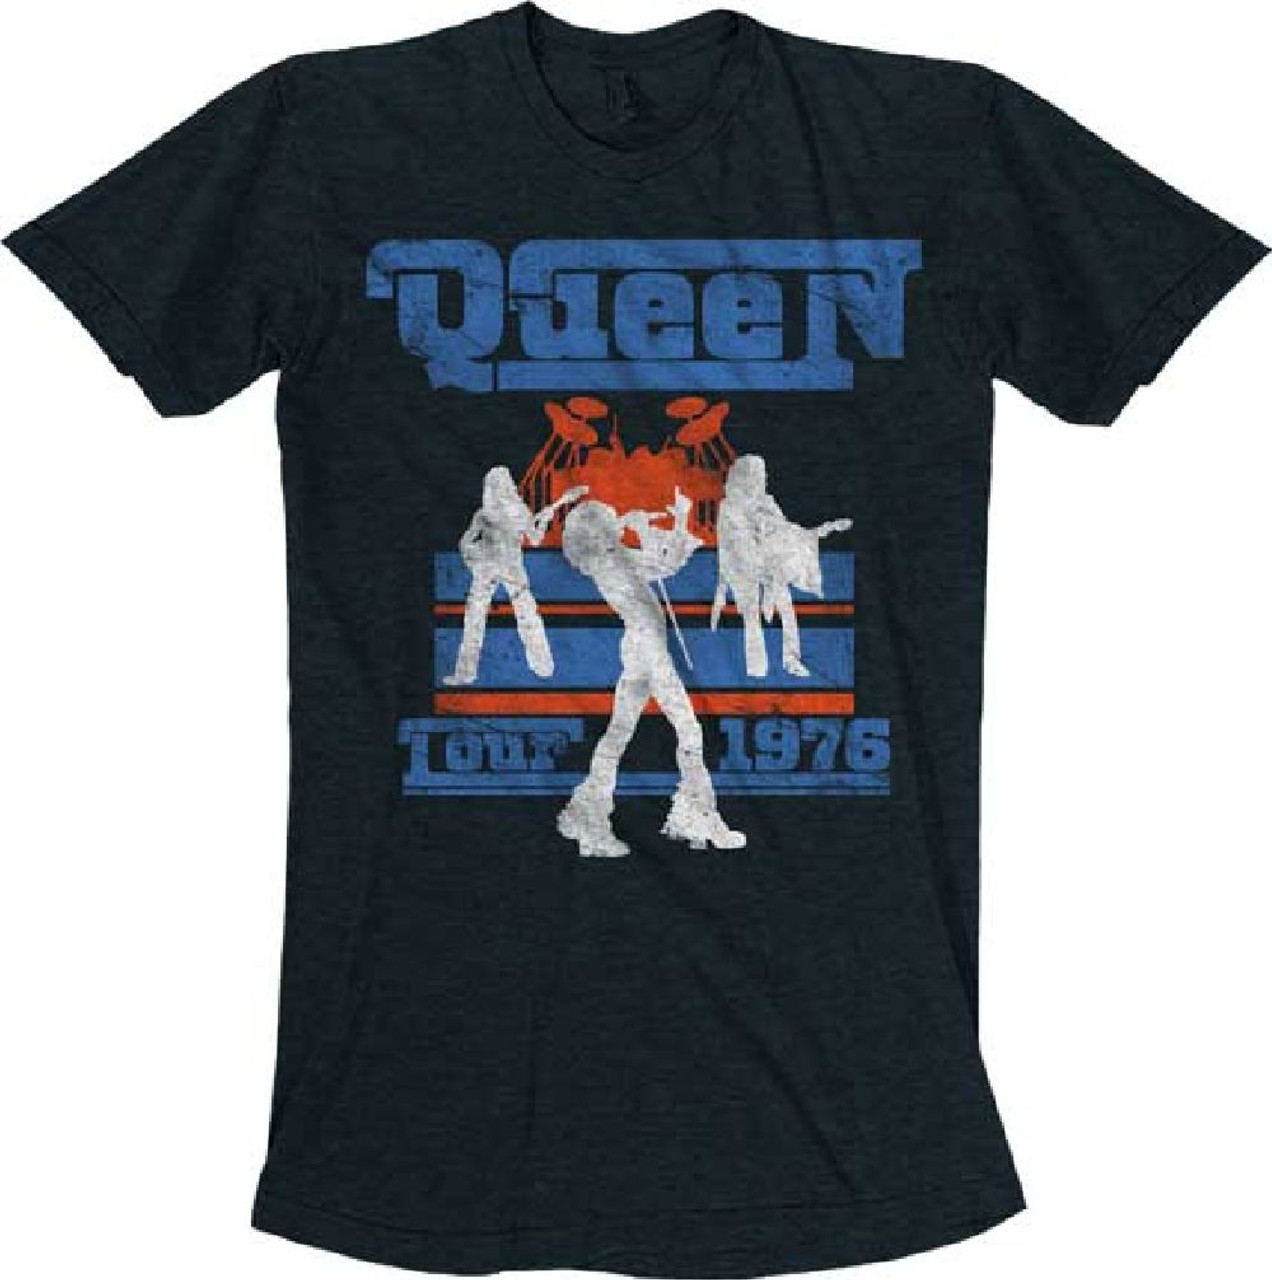 Queen tour 1976 t shirt new, Navy long sleeve bodycon dress, long torso one piece swimsuits. 